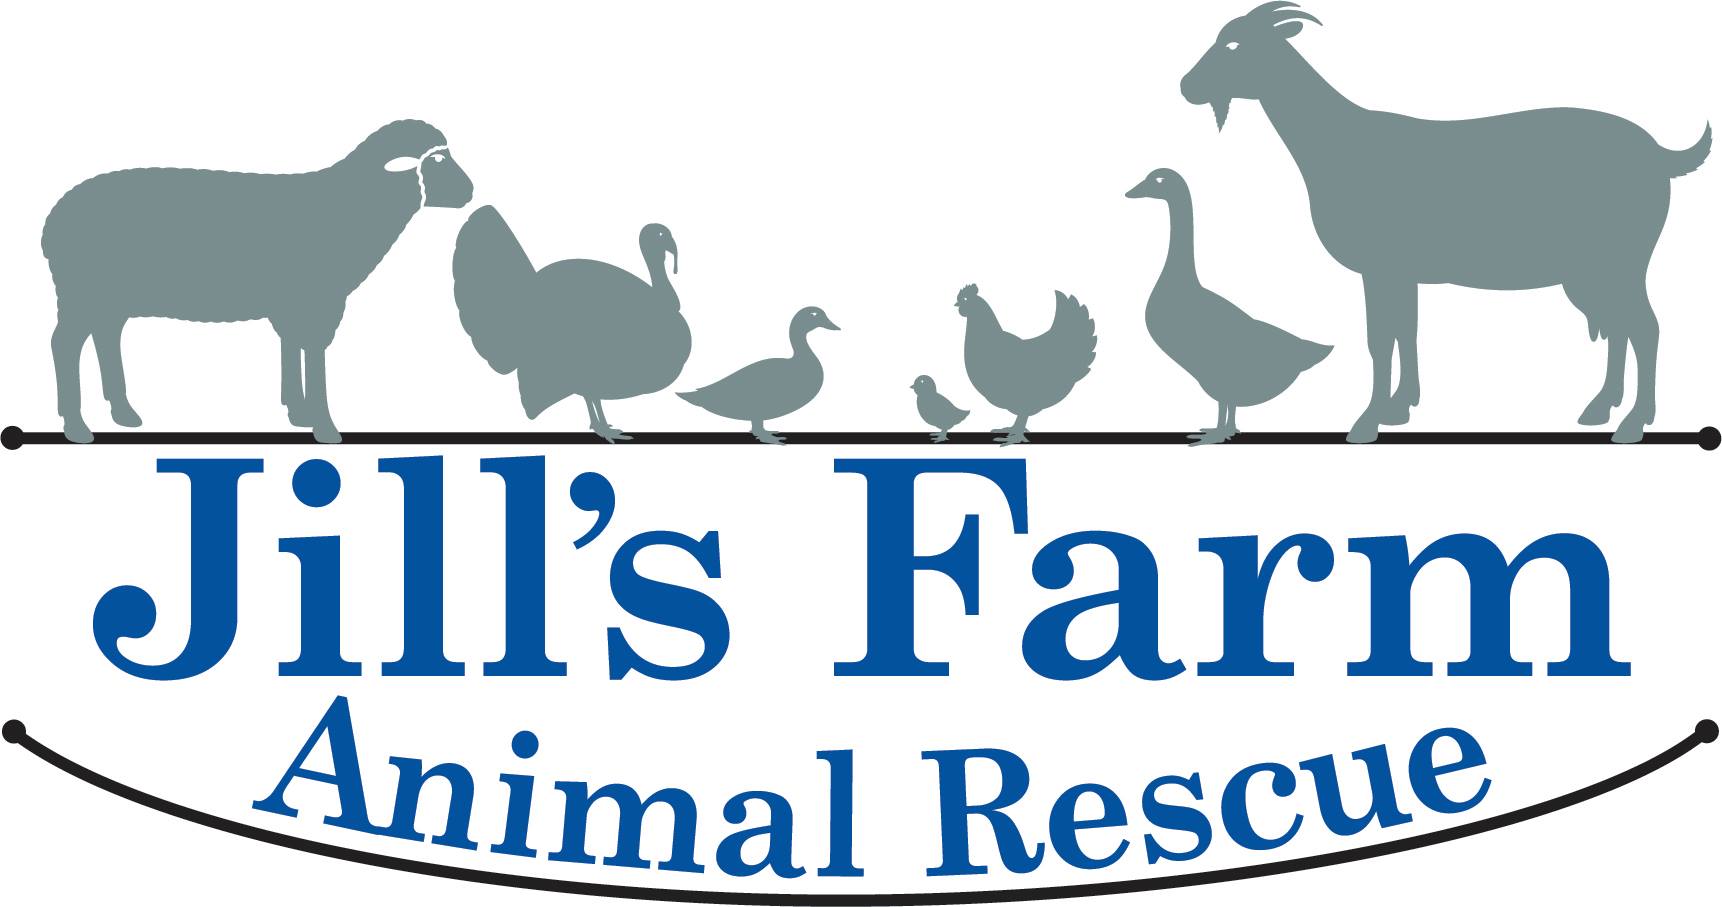 Jills Farm Animal Rescue